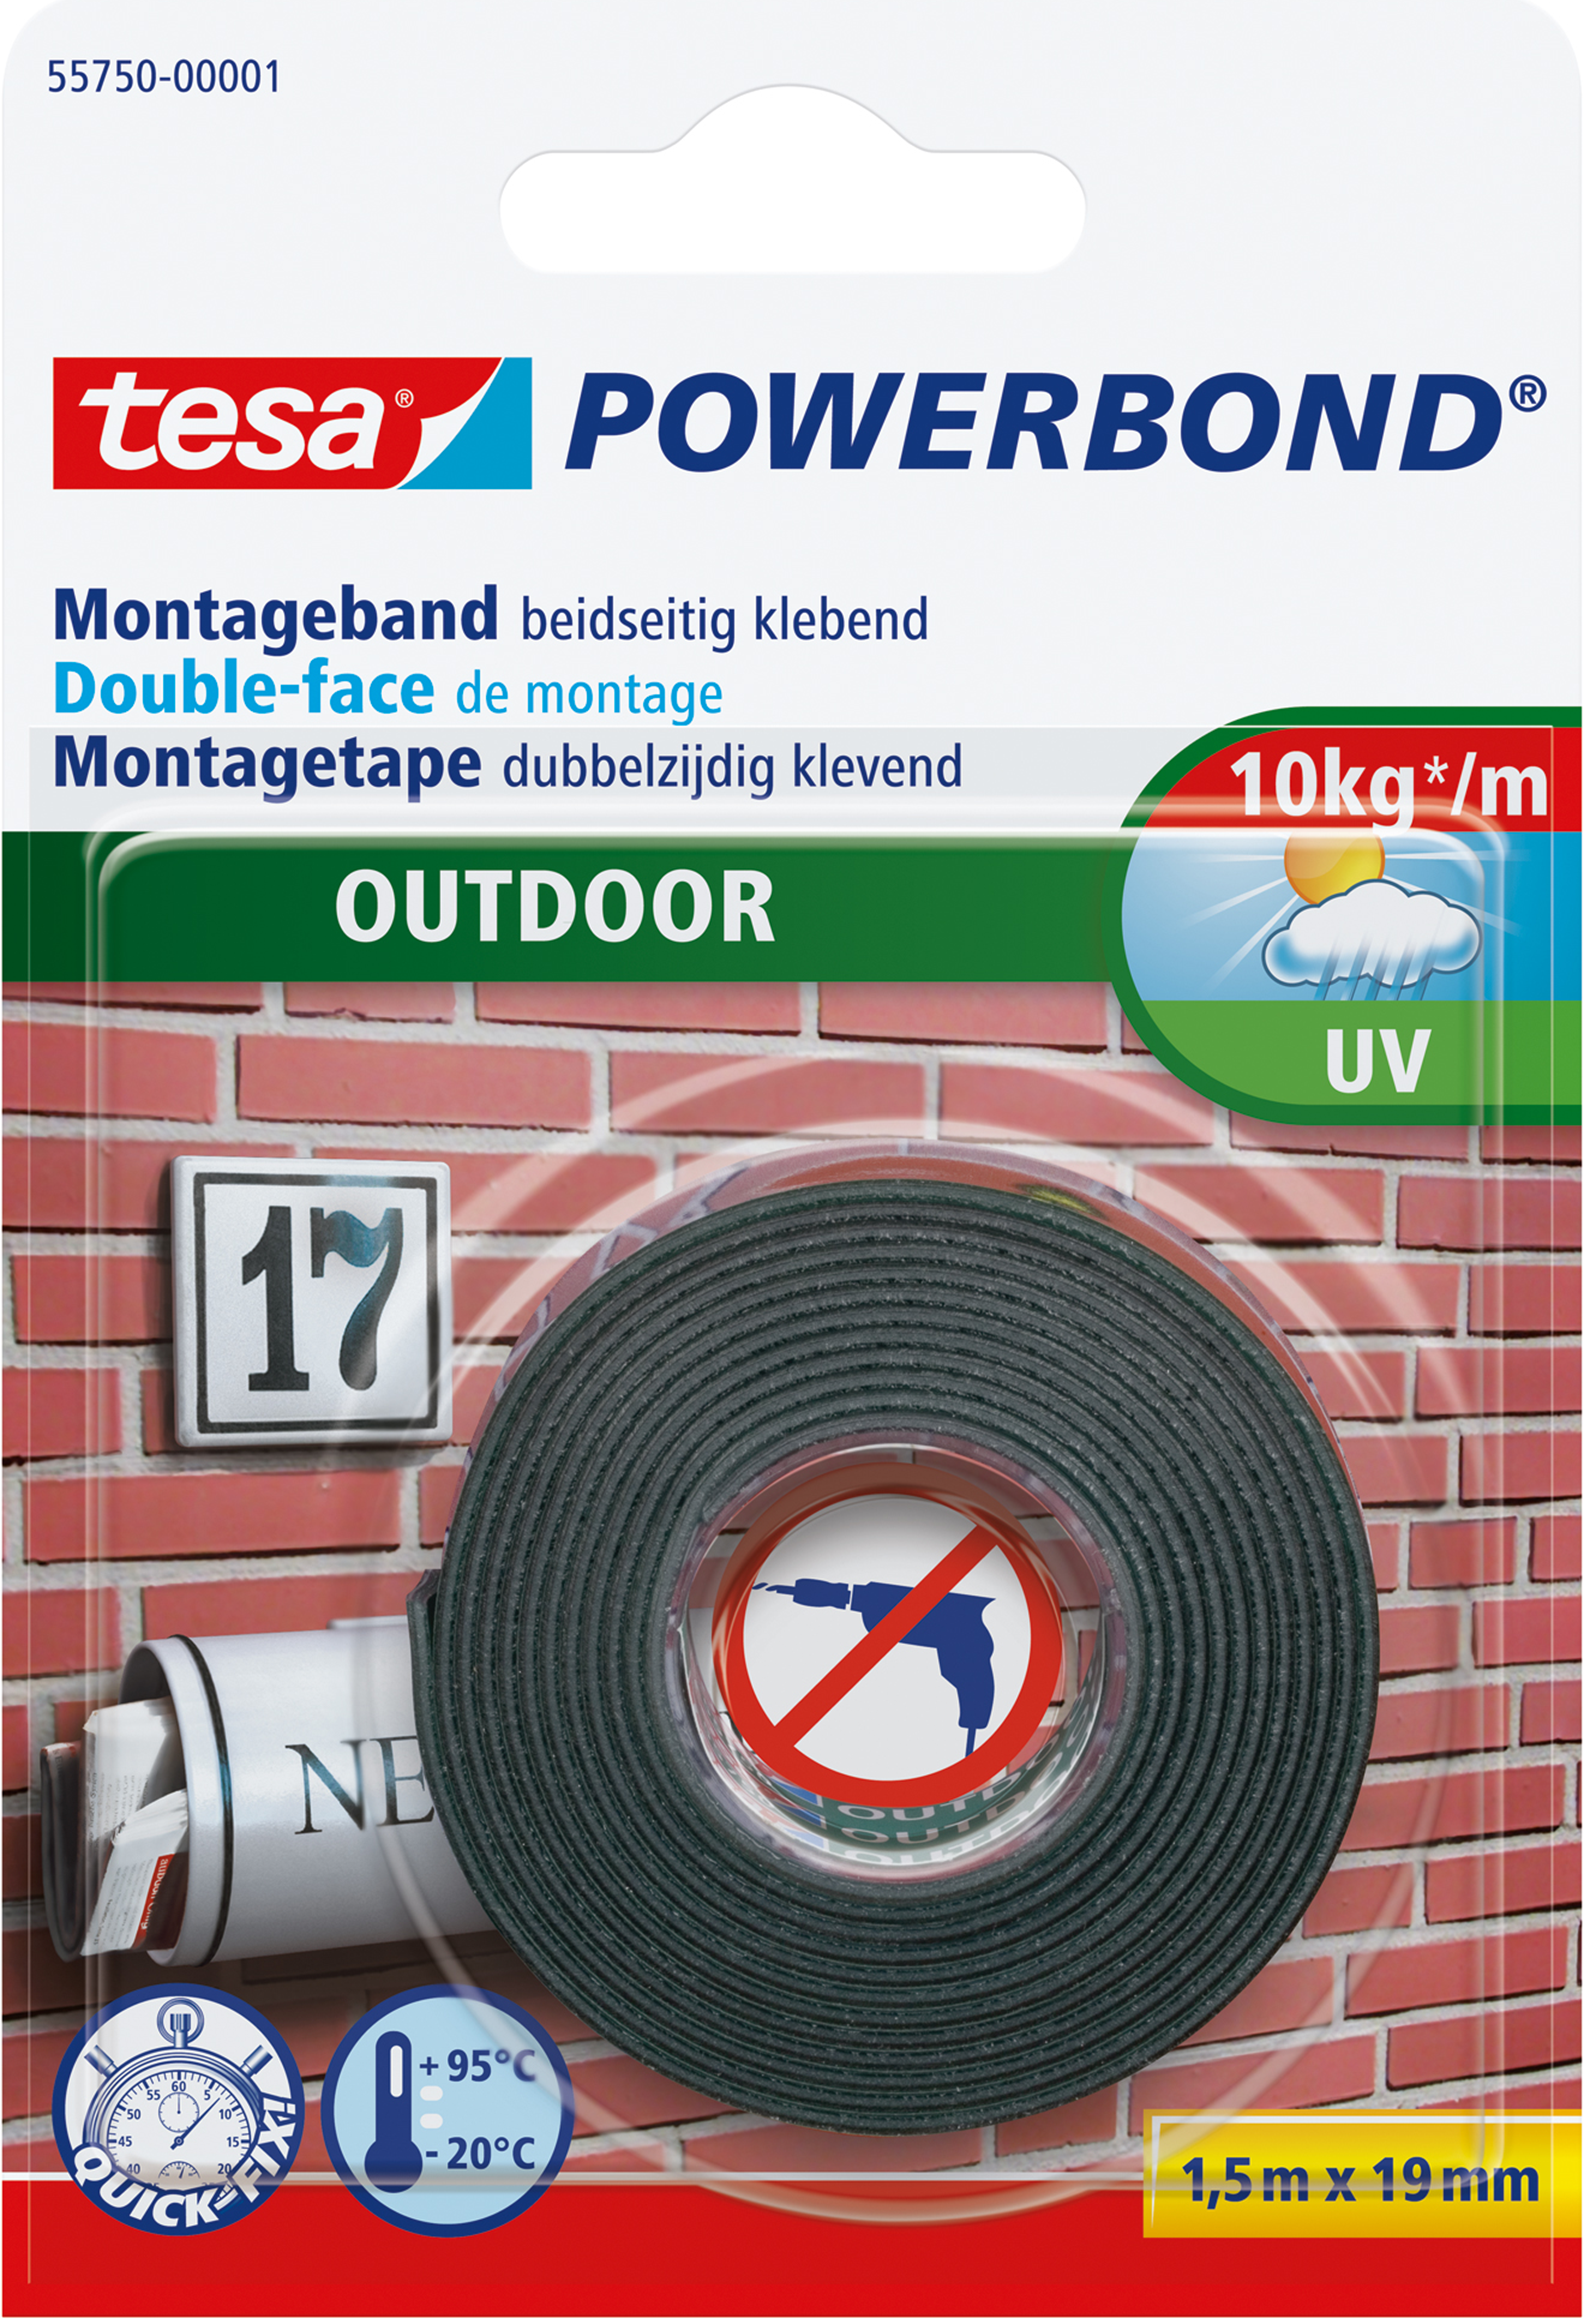 TESA Powerbond OUTDOOR (55750-00001-00)